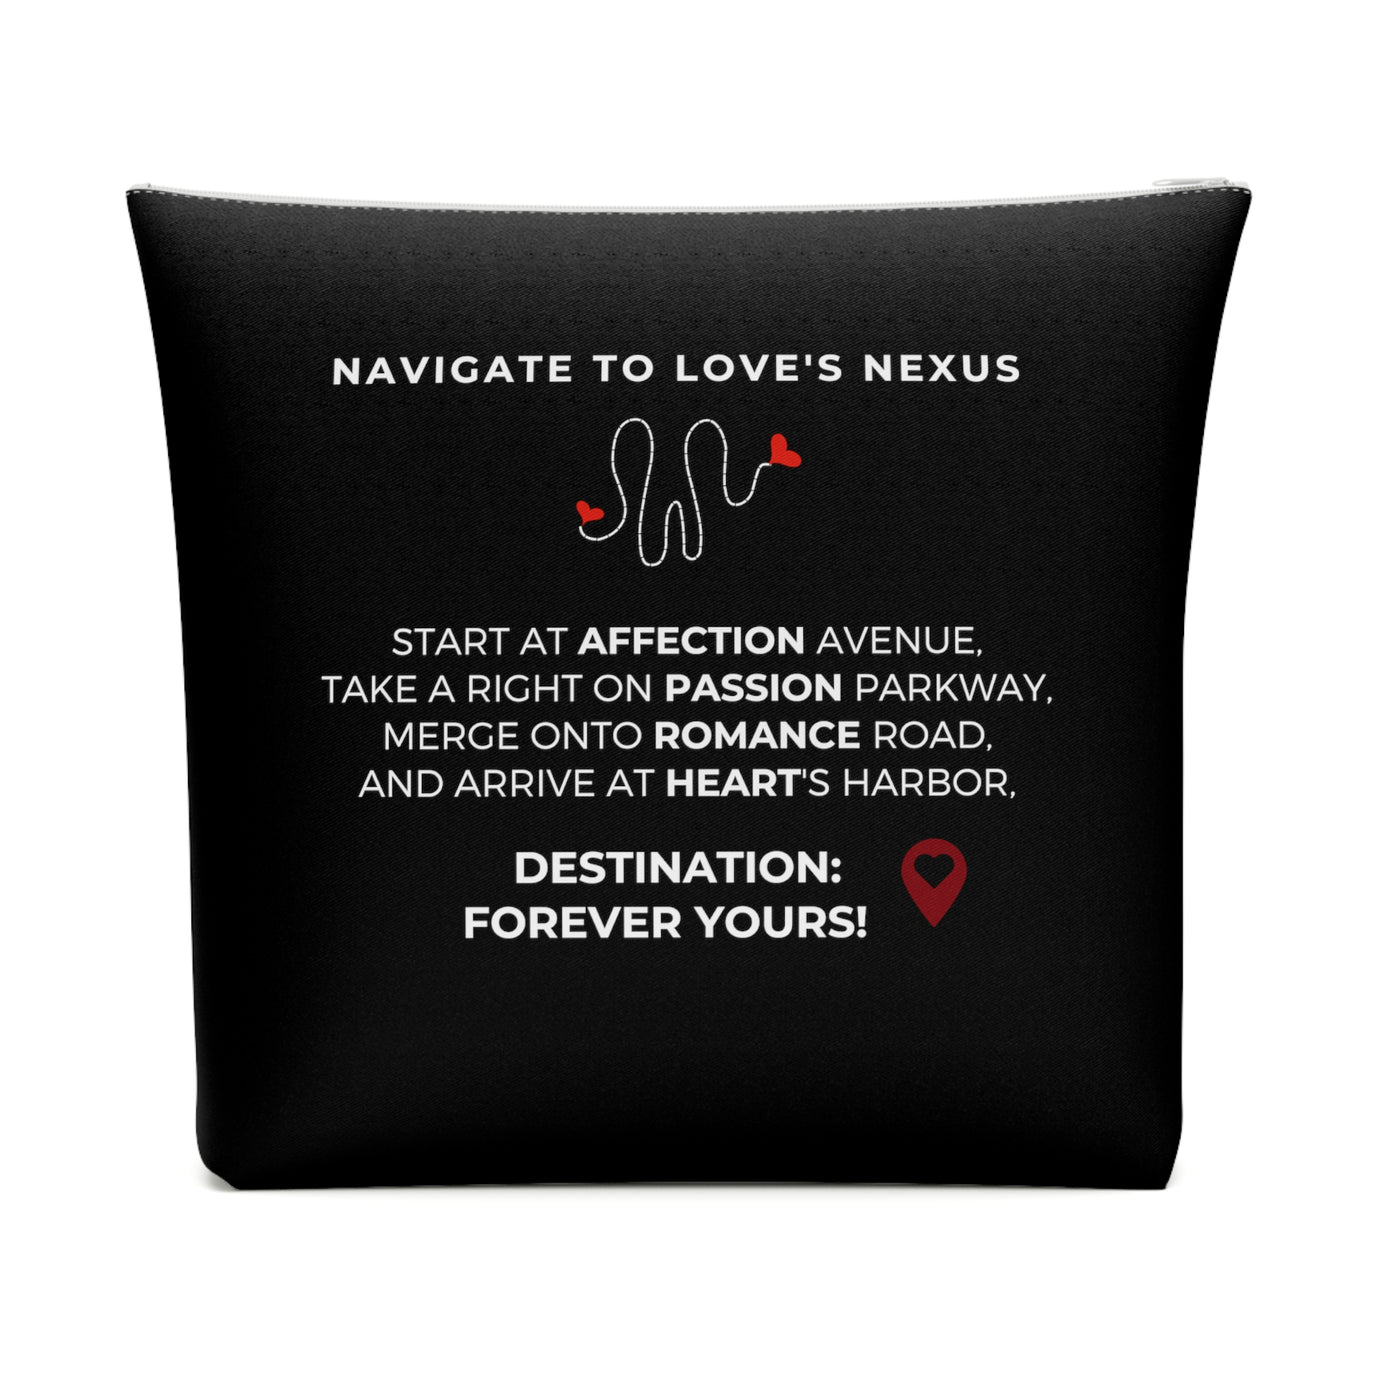 LOVE'S NEXUS Cosmetic Adventure Bag